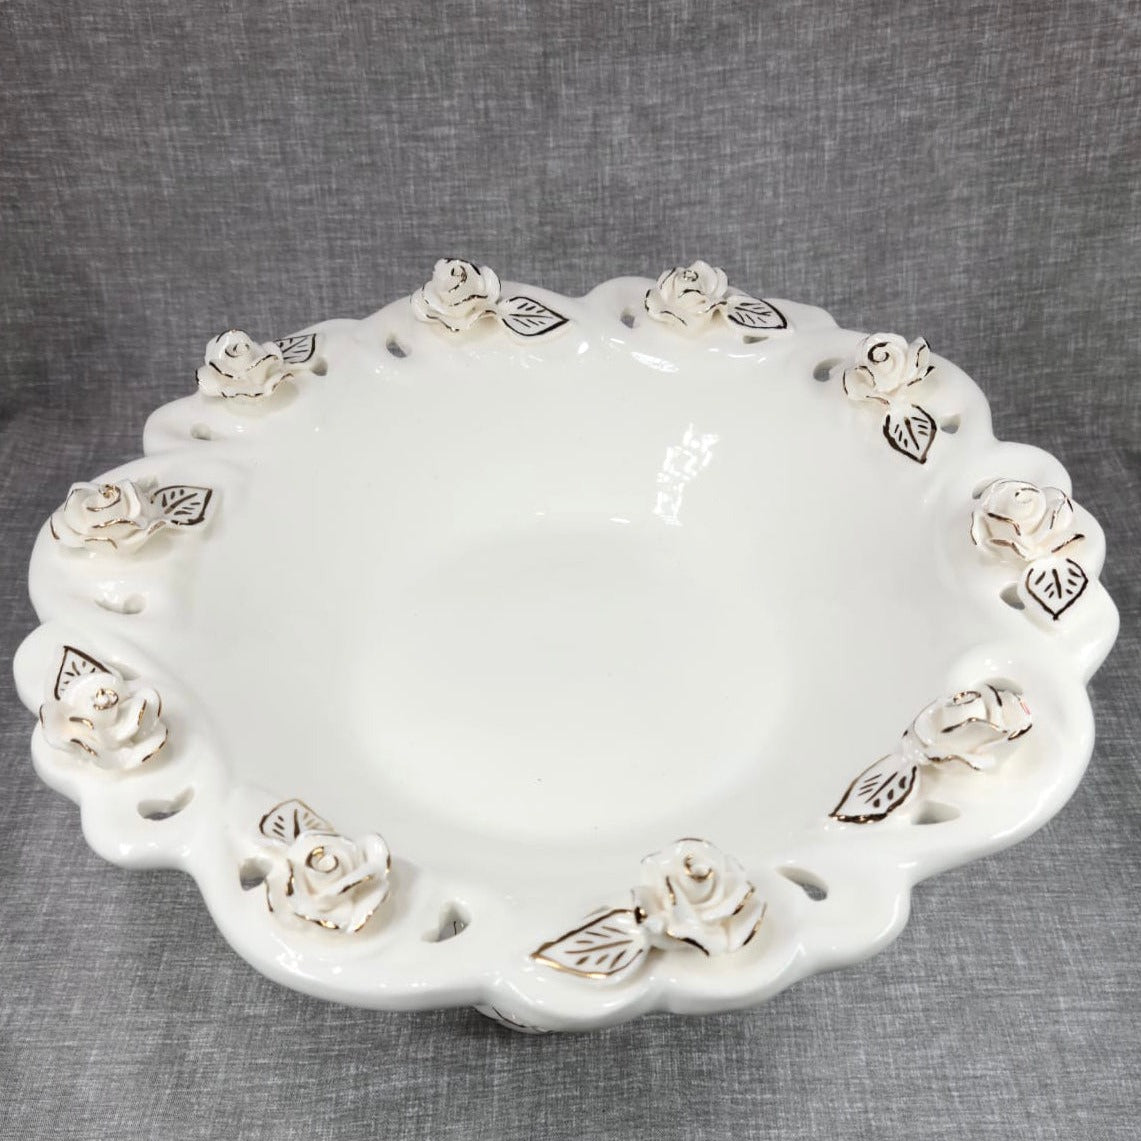 White Ceramic Fruit Bowl with Flower on Top/Bottom - HighTouch 